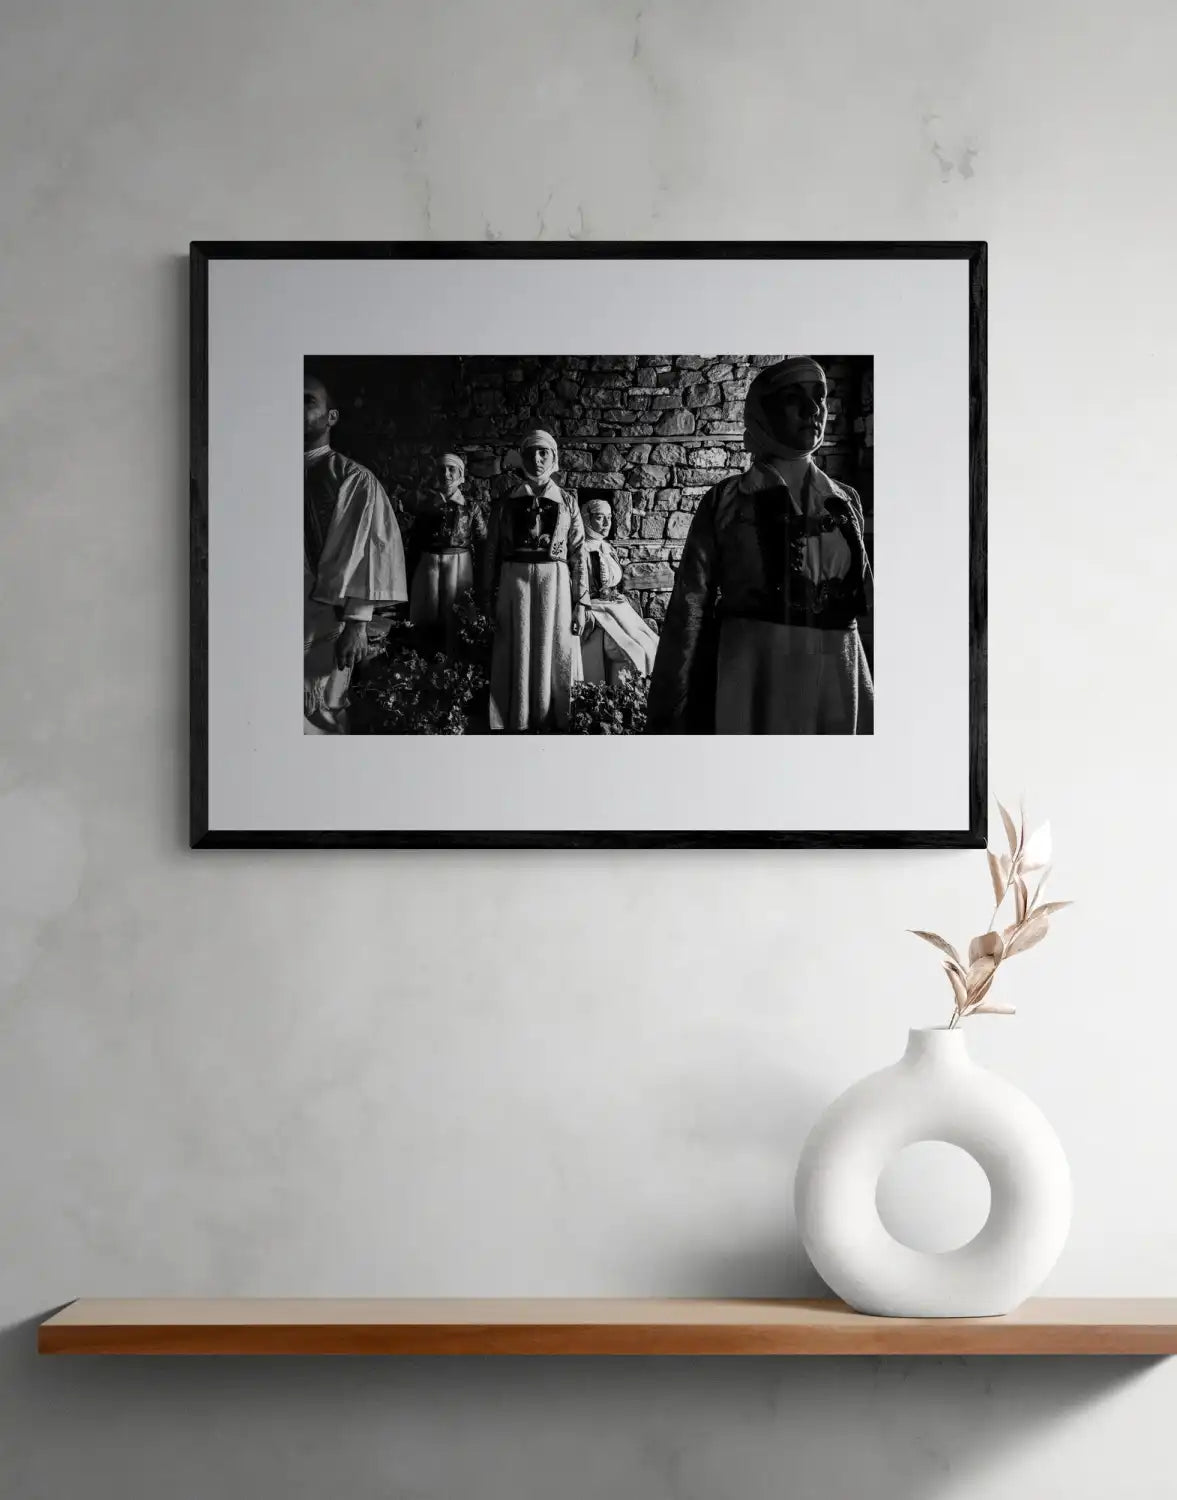 Paleopyrgos, Pogoni, Epirus, Greece | Costumes in Warehouse | Black-and-White Wall Art Photography - single print framed